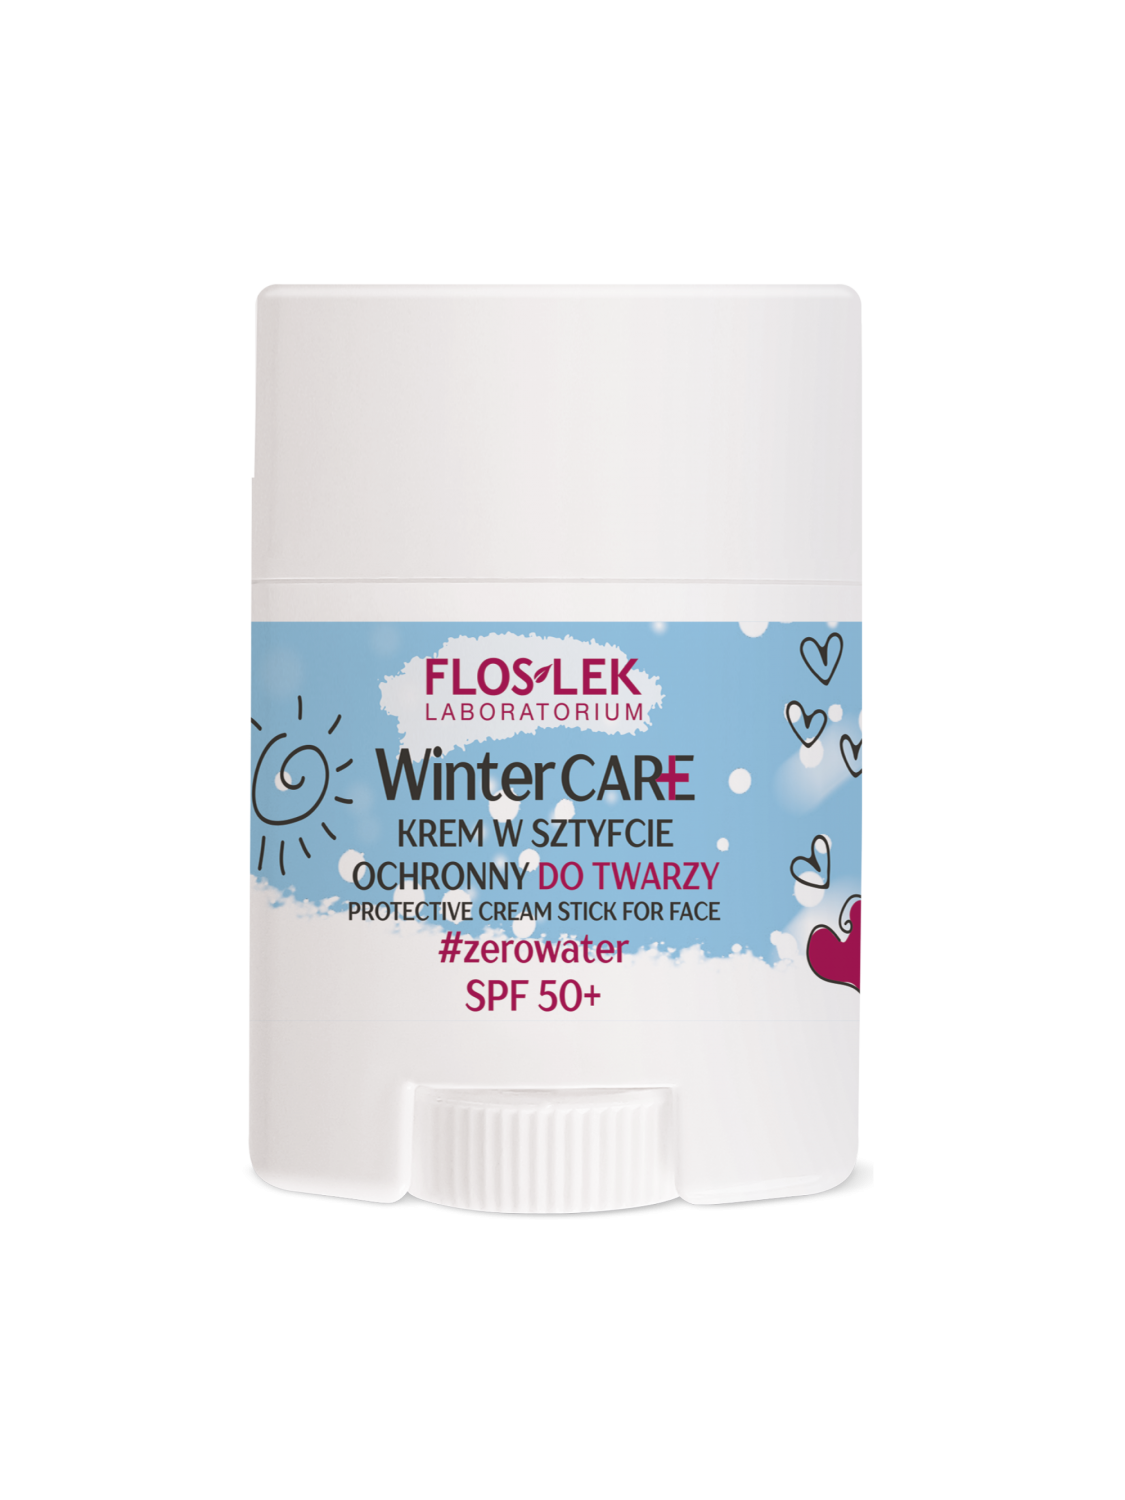 Face stick cream SPF 50+ WINTER CARE Floslek